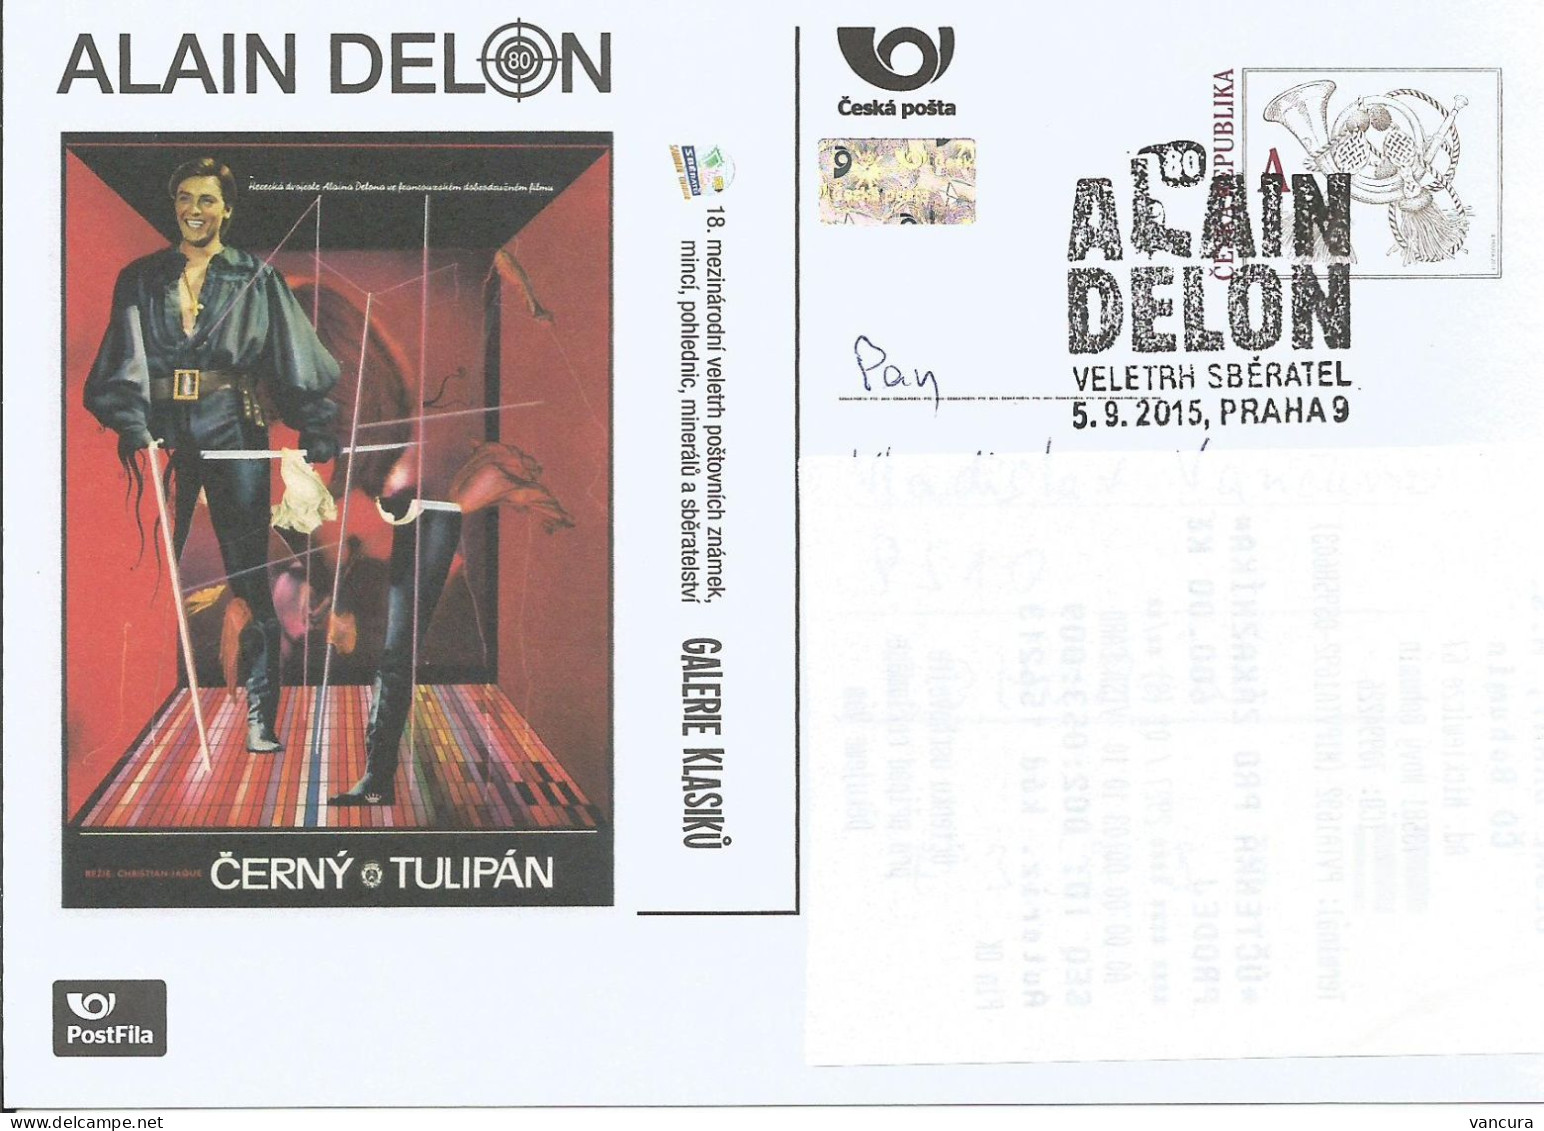 Postfila Card Czech Republic Sberatel Prague 2015 Alain Delon - Cartes Postales